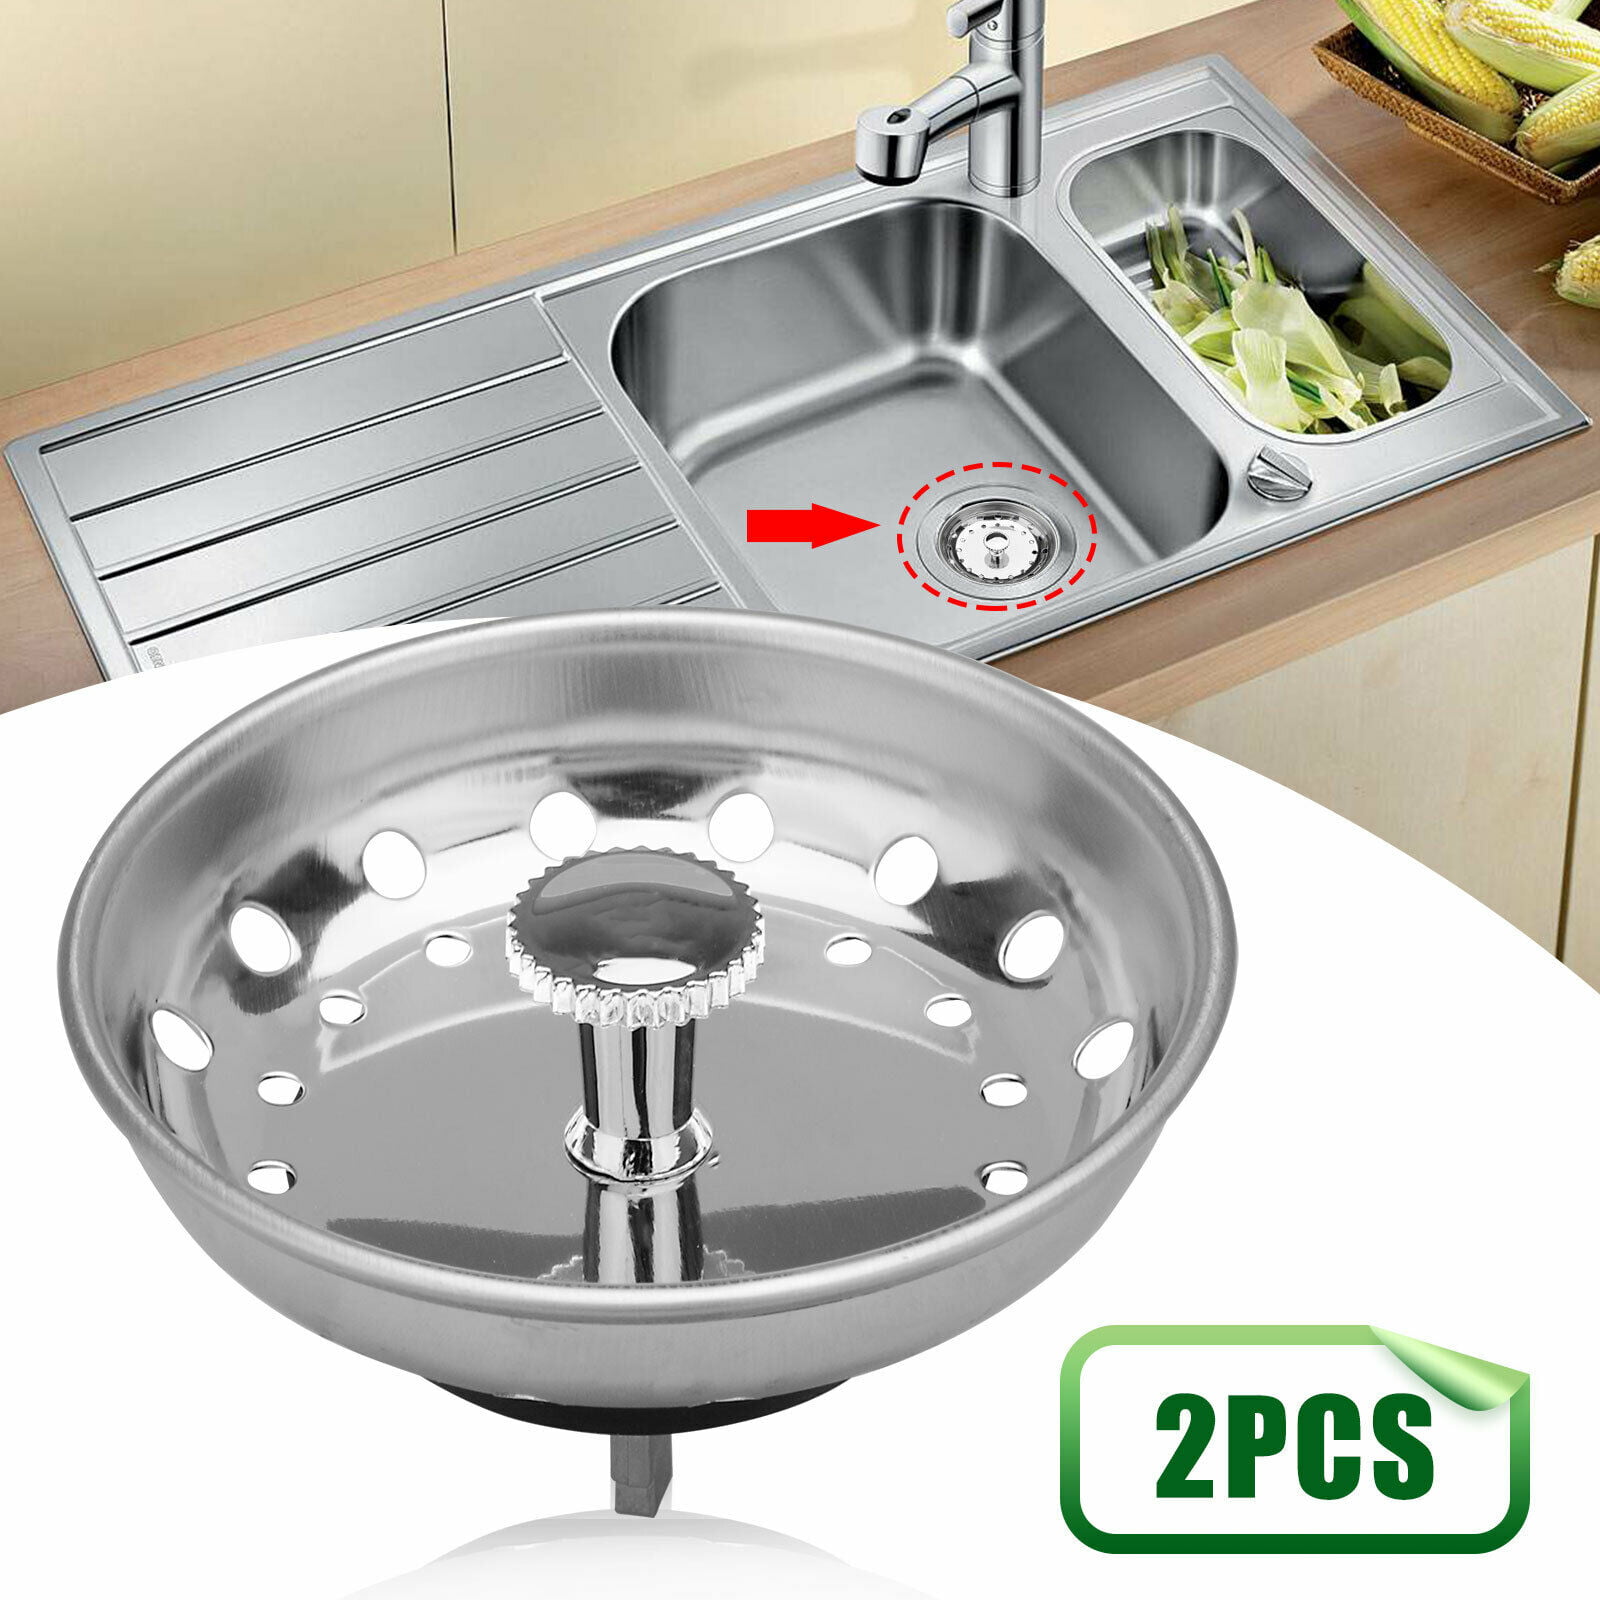 Stopper Stainless Steel Kitchen Sink Strainer Waste Plug Drain Filter Basket 7N 